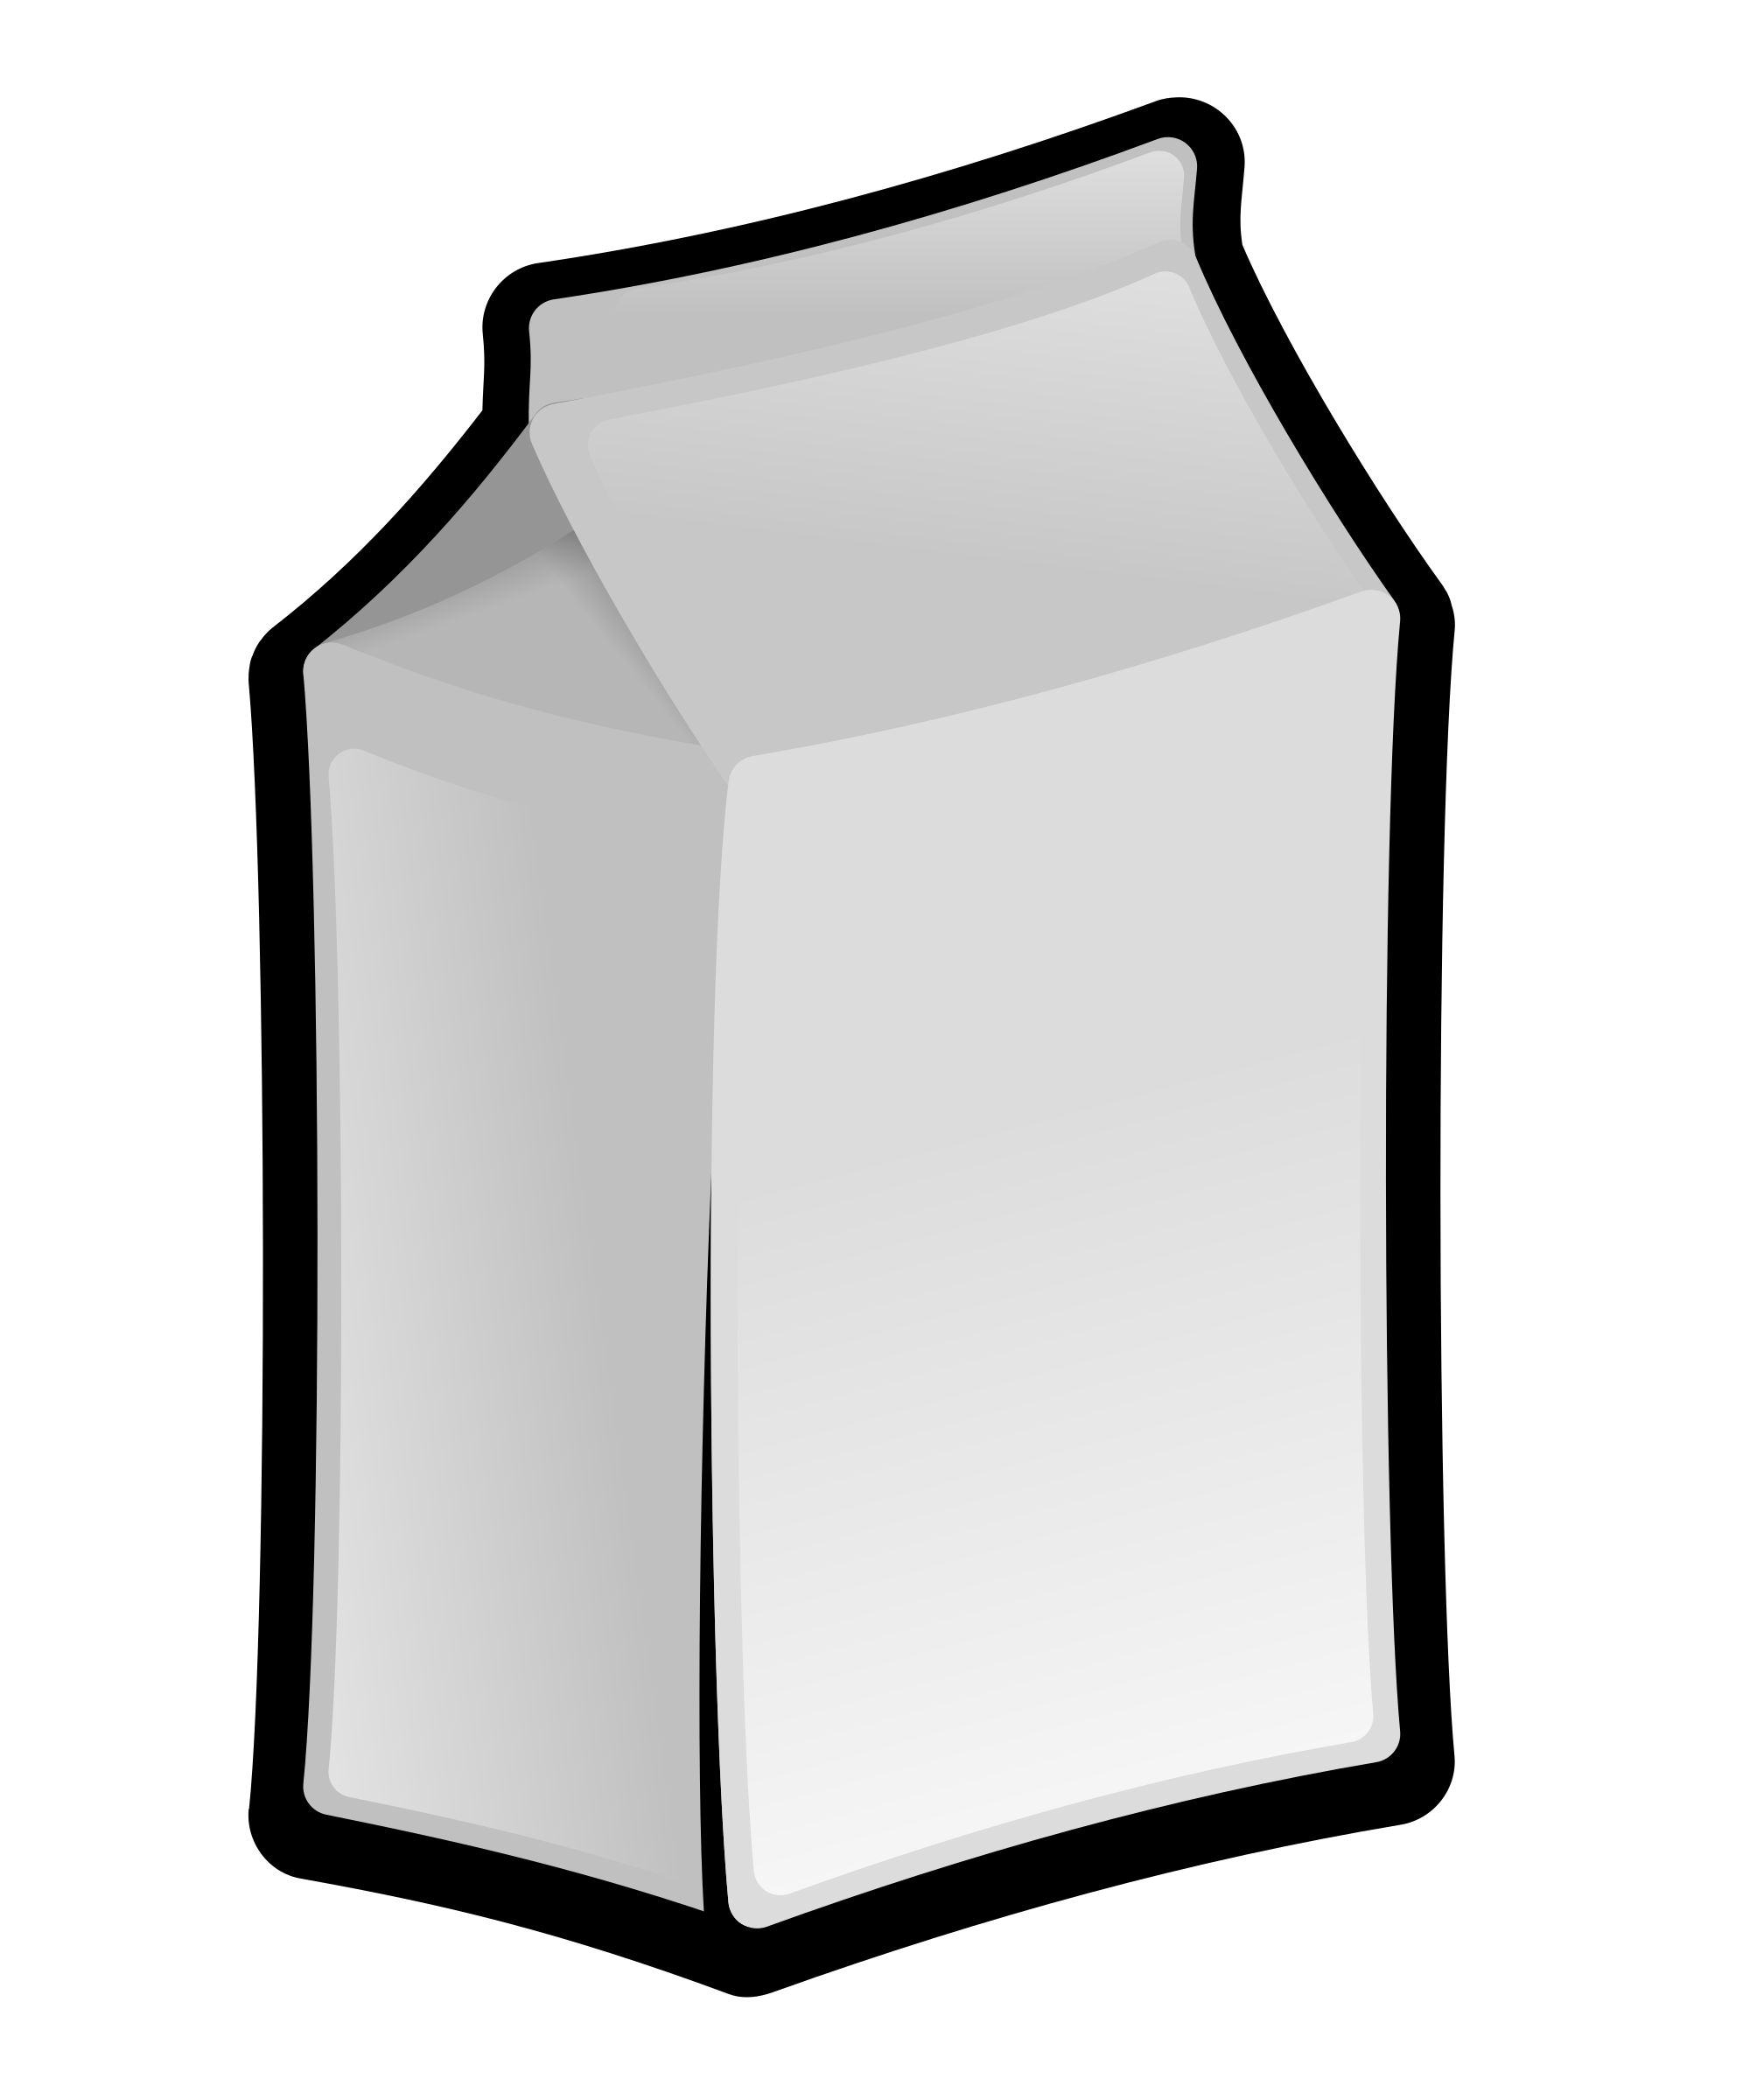 Milk Box Clipart